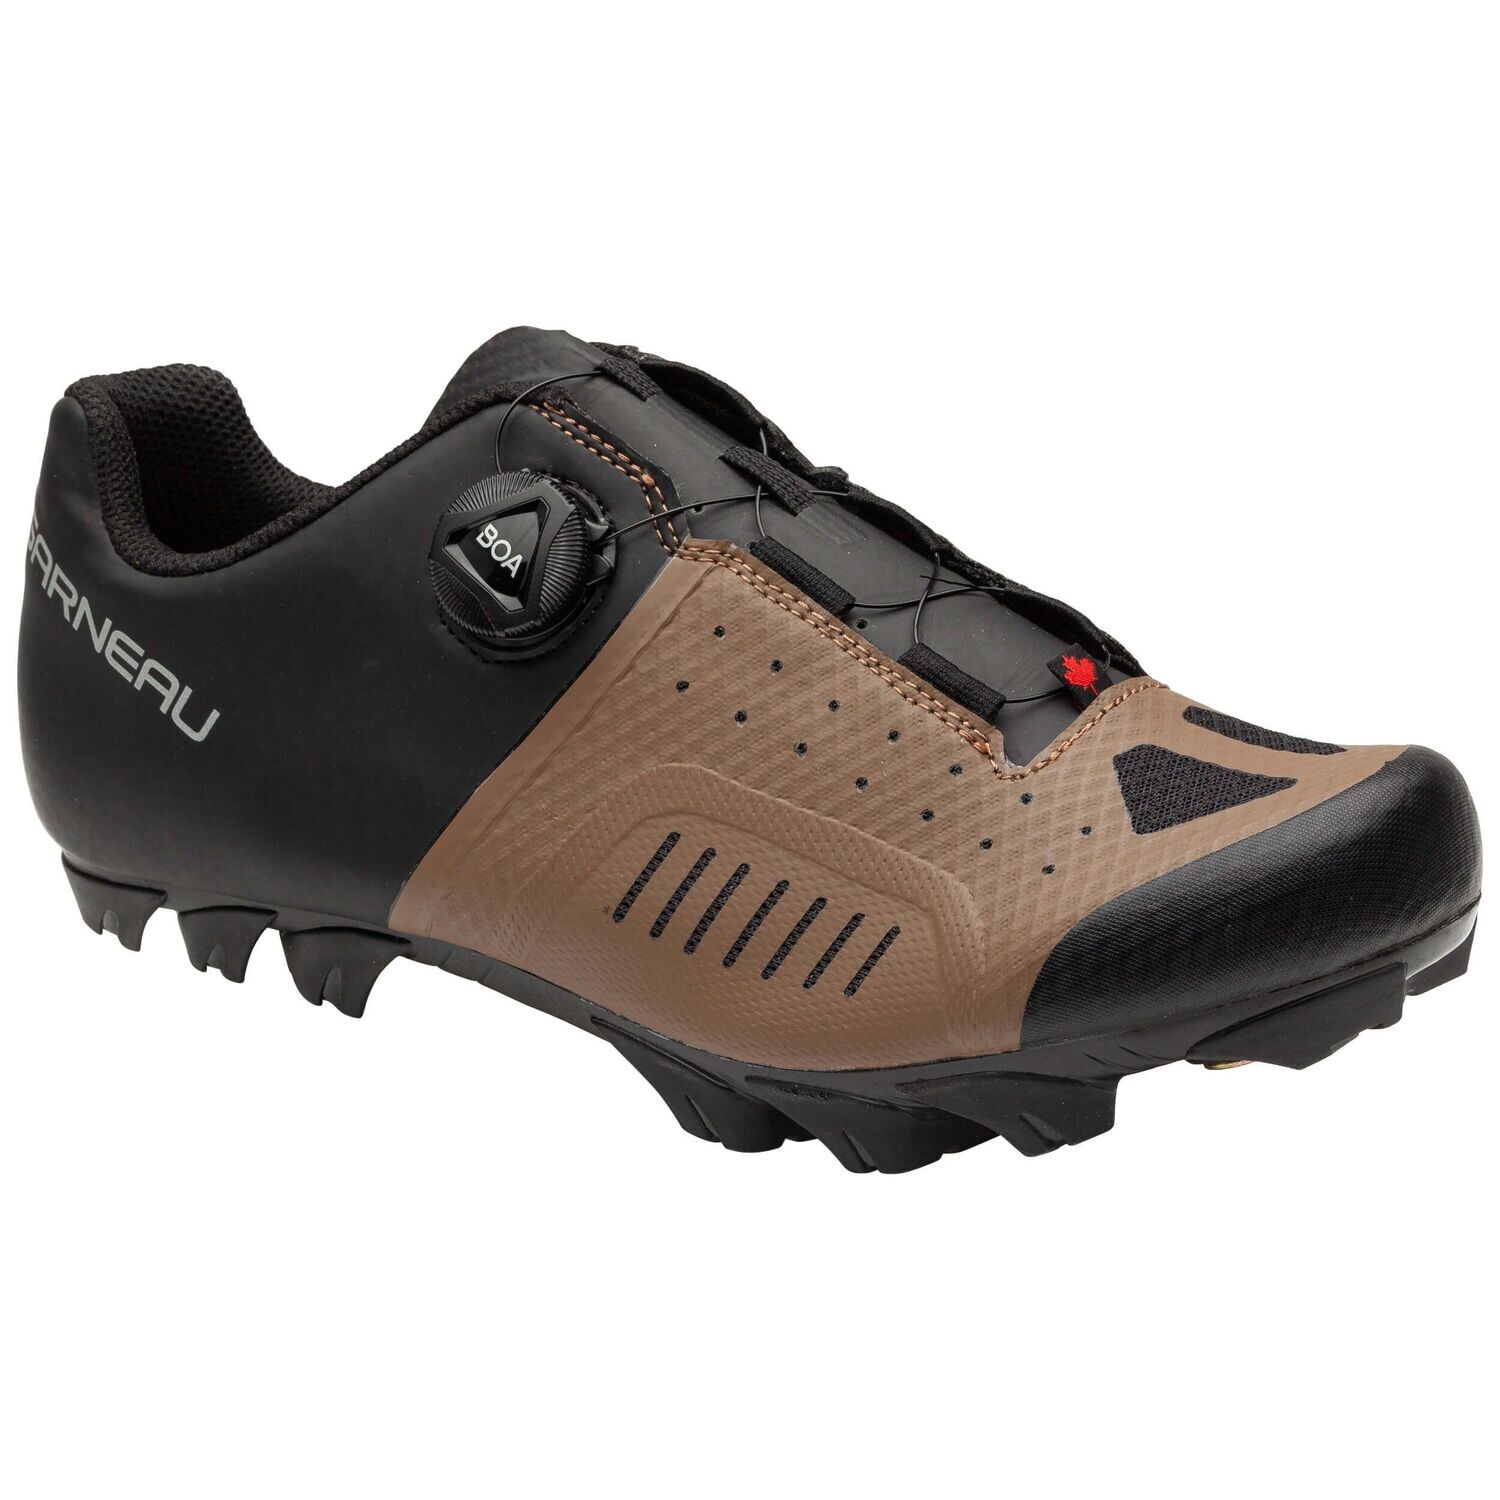 Louis Garneau Hillibilli Cycling Shoe - Men's
Size 45